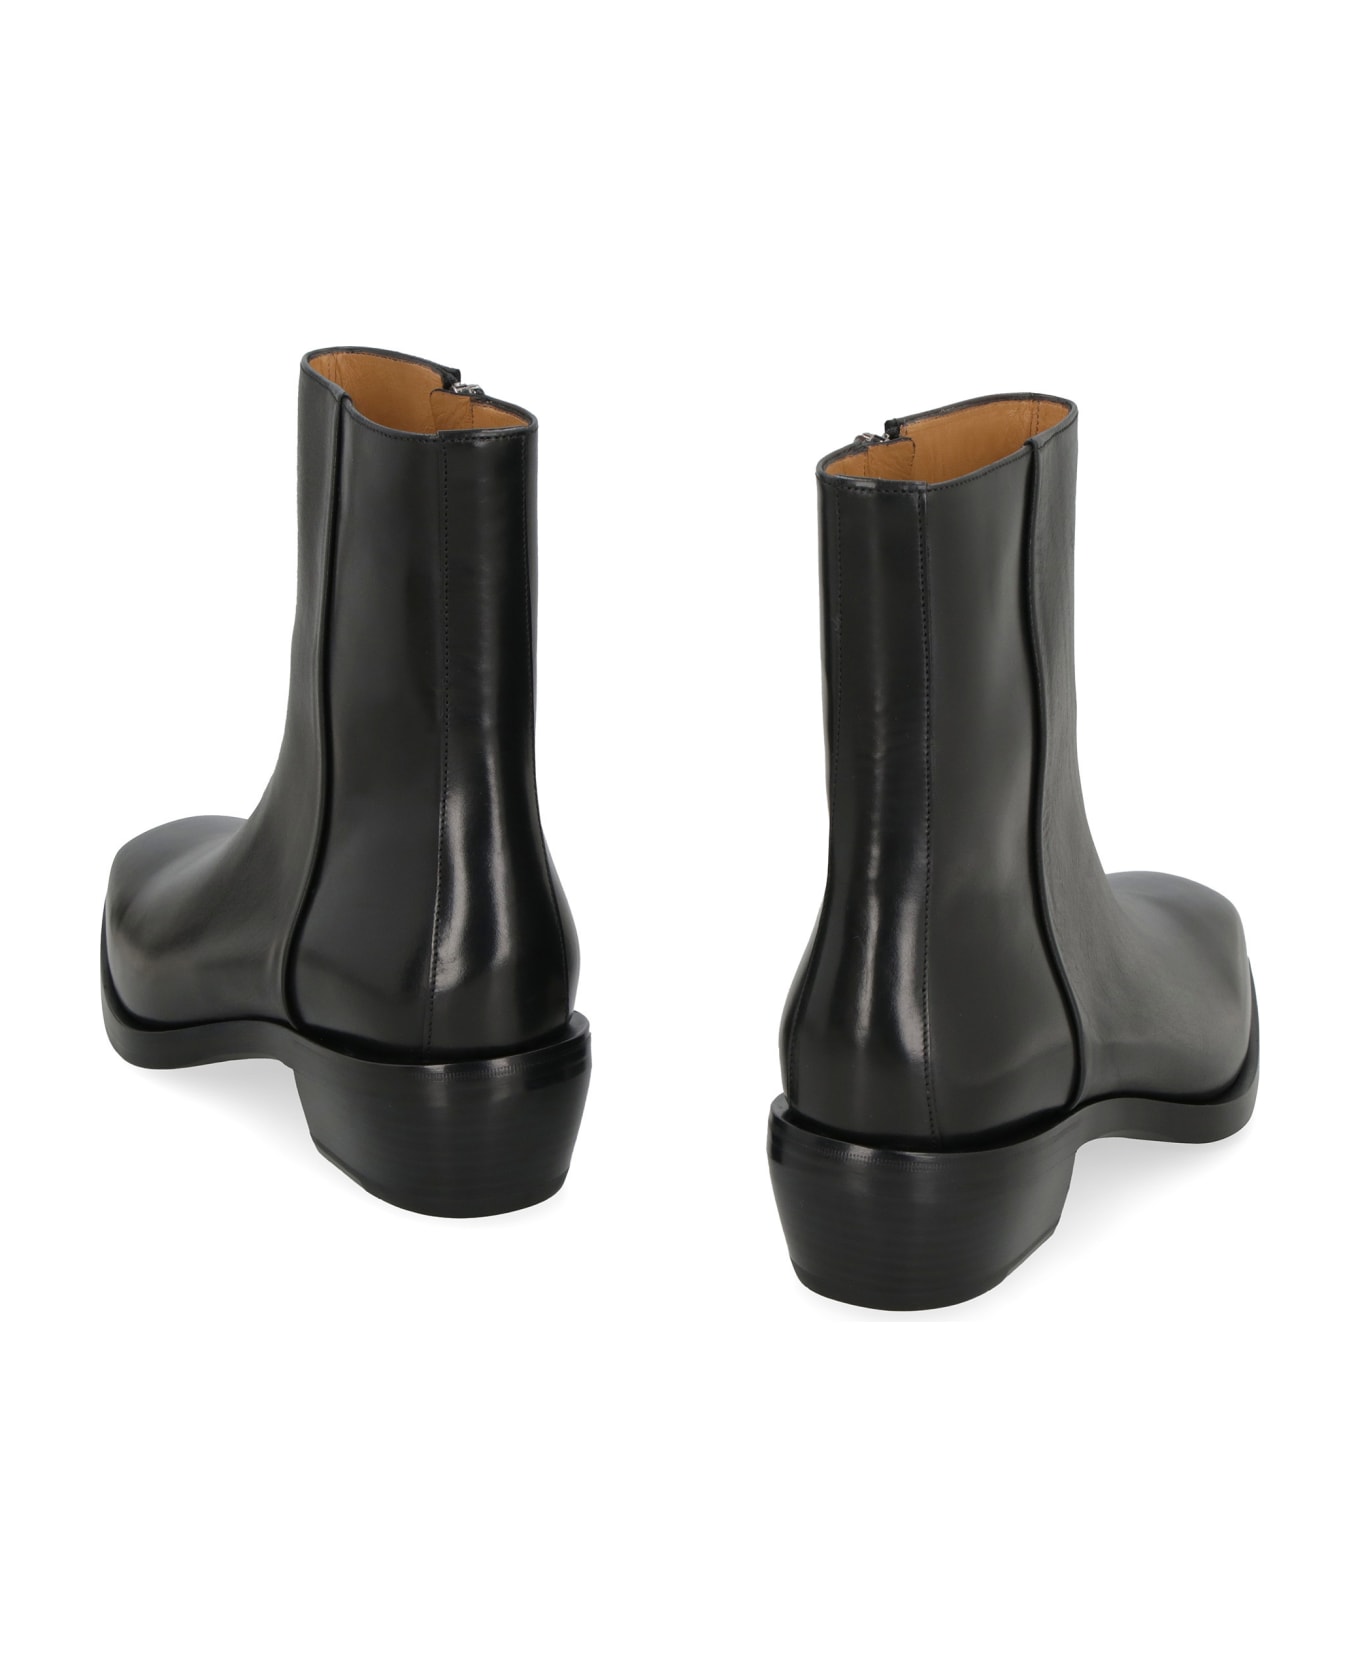 Ferragamo Leather Ankle Boots - black ブーツ